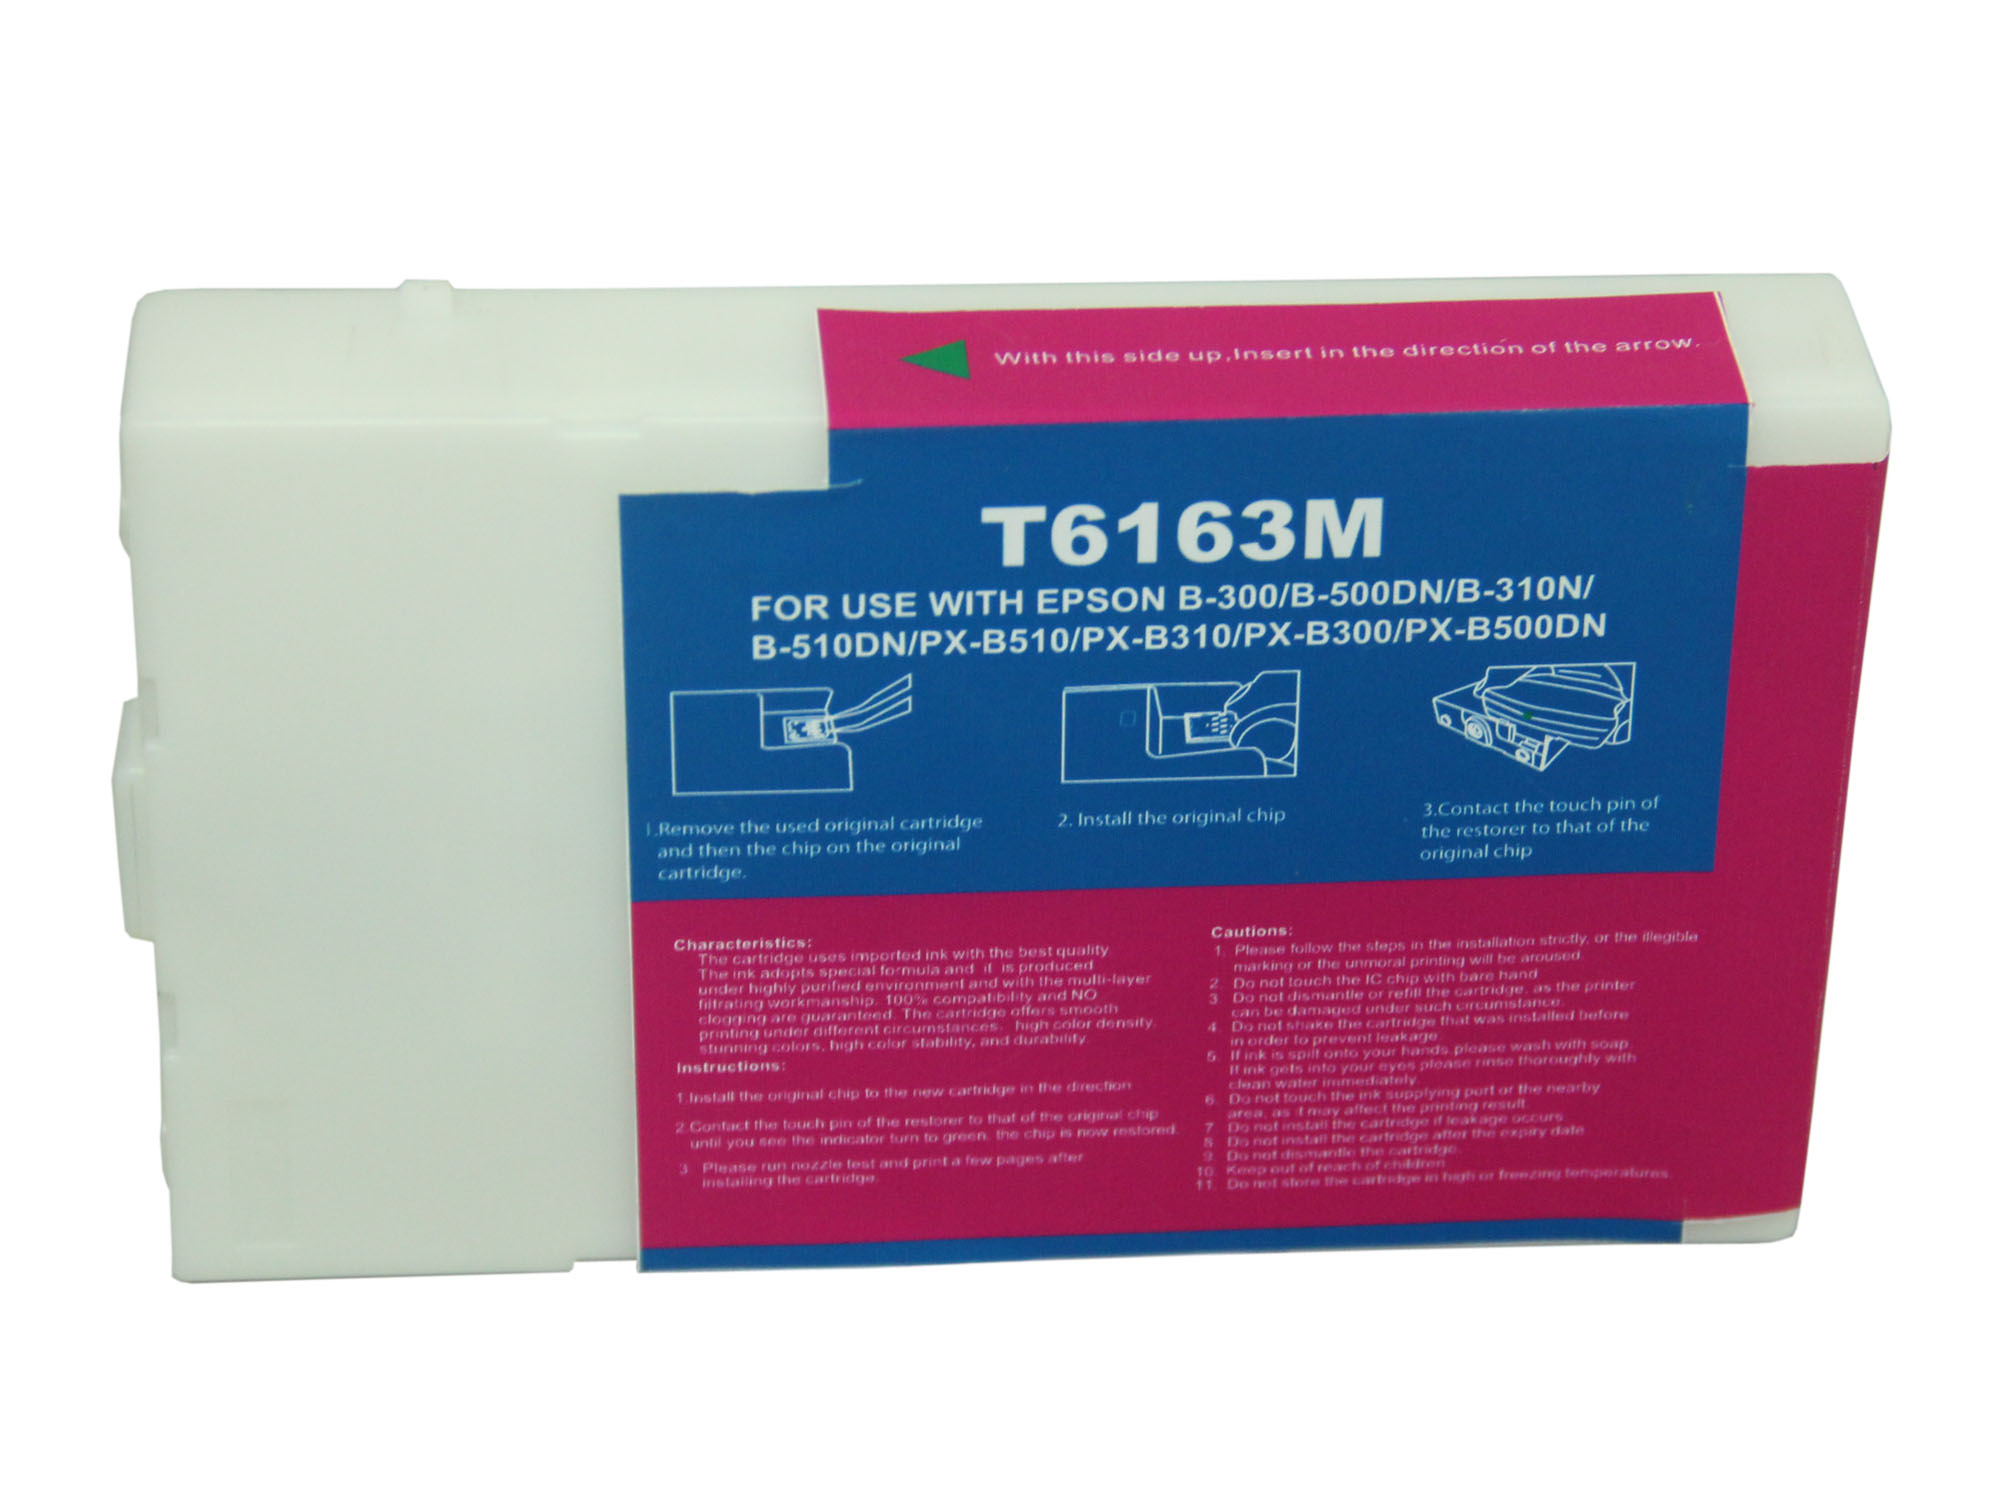 Premium Quality Magenta Inkjet Cartridge compatible with Epson T616300 (Epson 616)